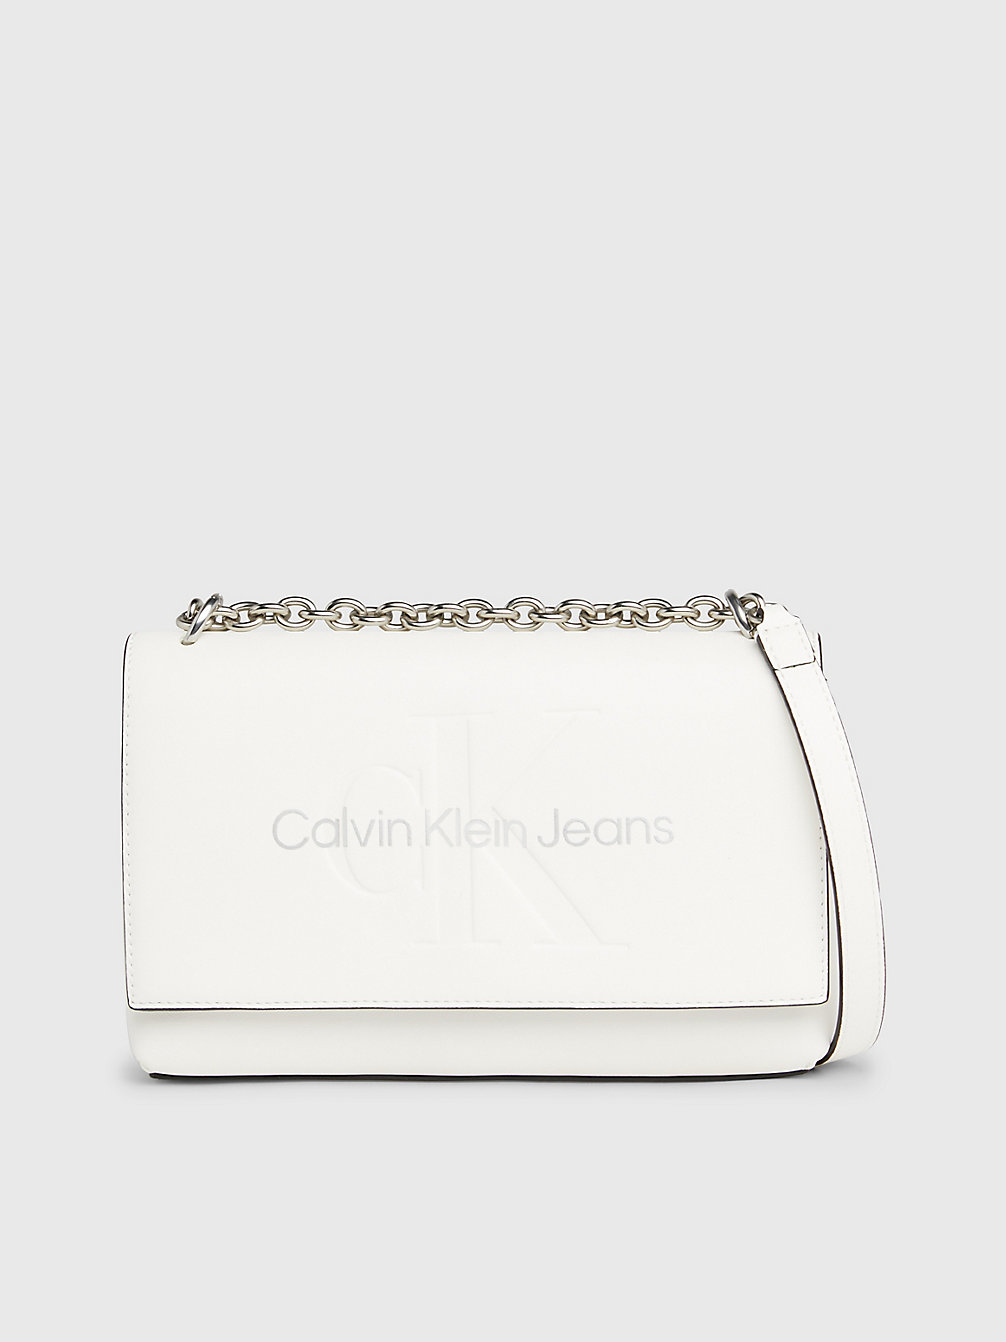 WHITE/SILVER LOGO Convertible Shoulder Bag undefined Women Calvin Klein